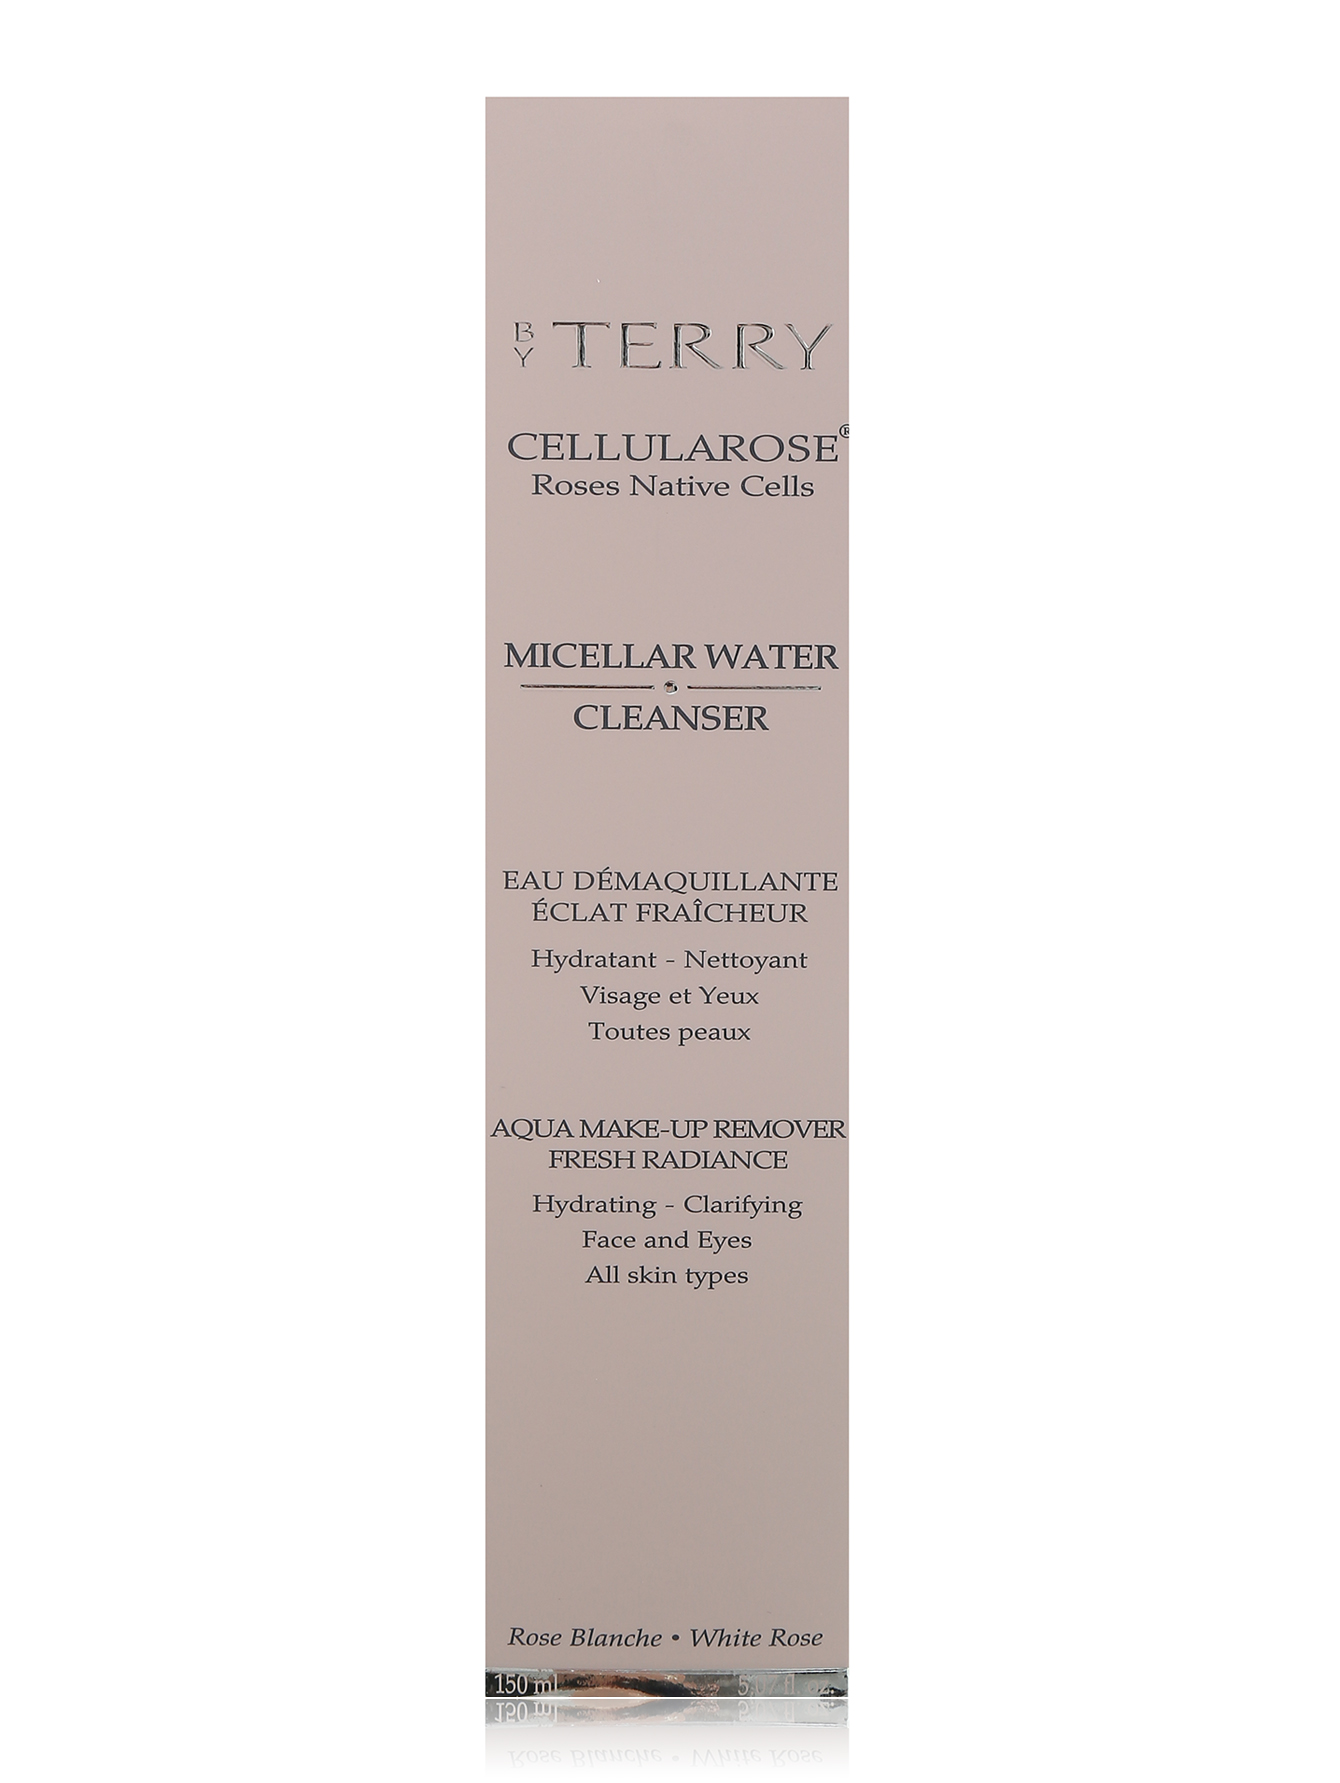 Мицеллярная вода - Cellularose, 150ml - Обтравка1